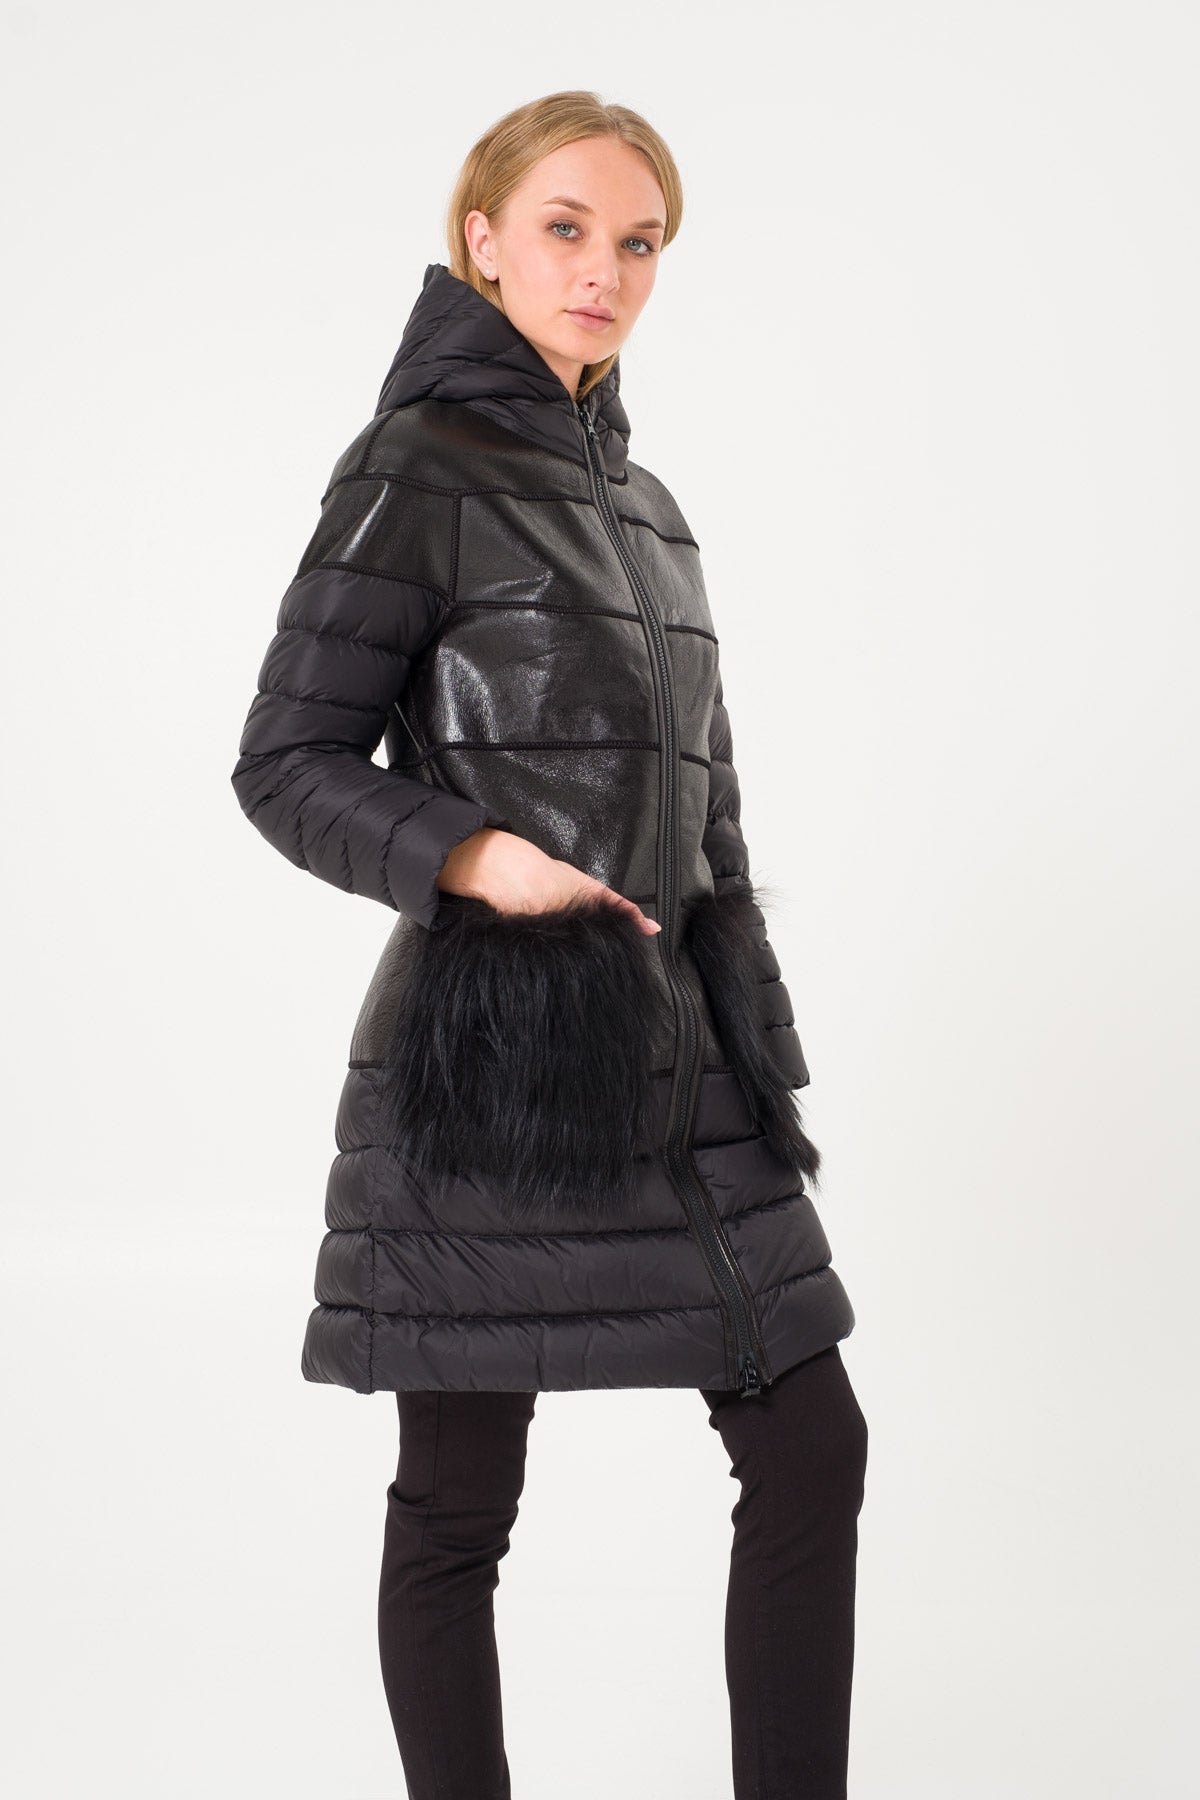 Black Long Puffer Coat